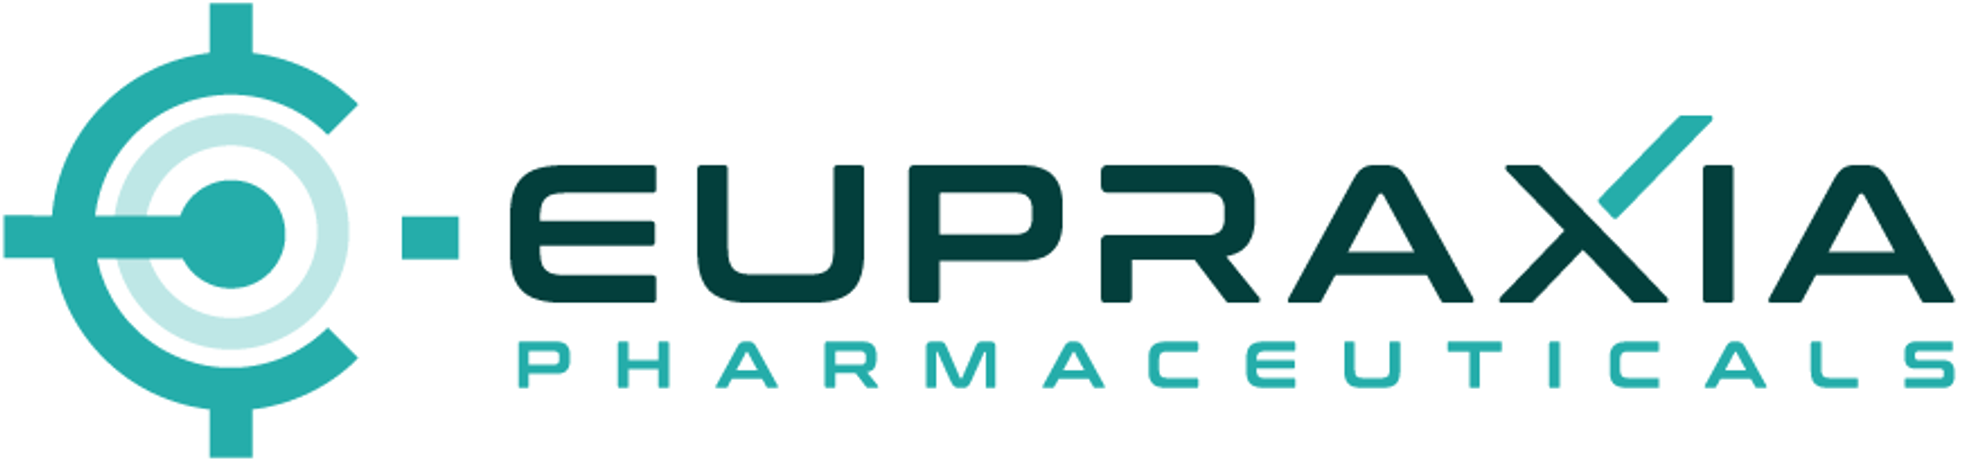 Eupraxia - Delivering Precision Therapy Technology